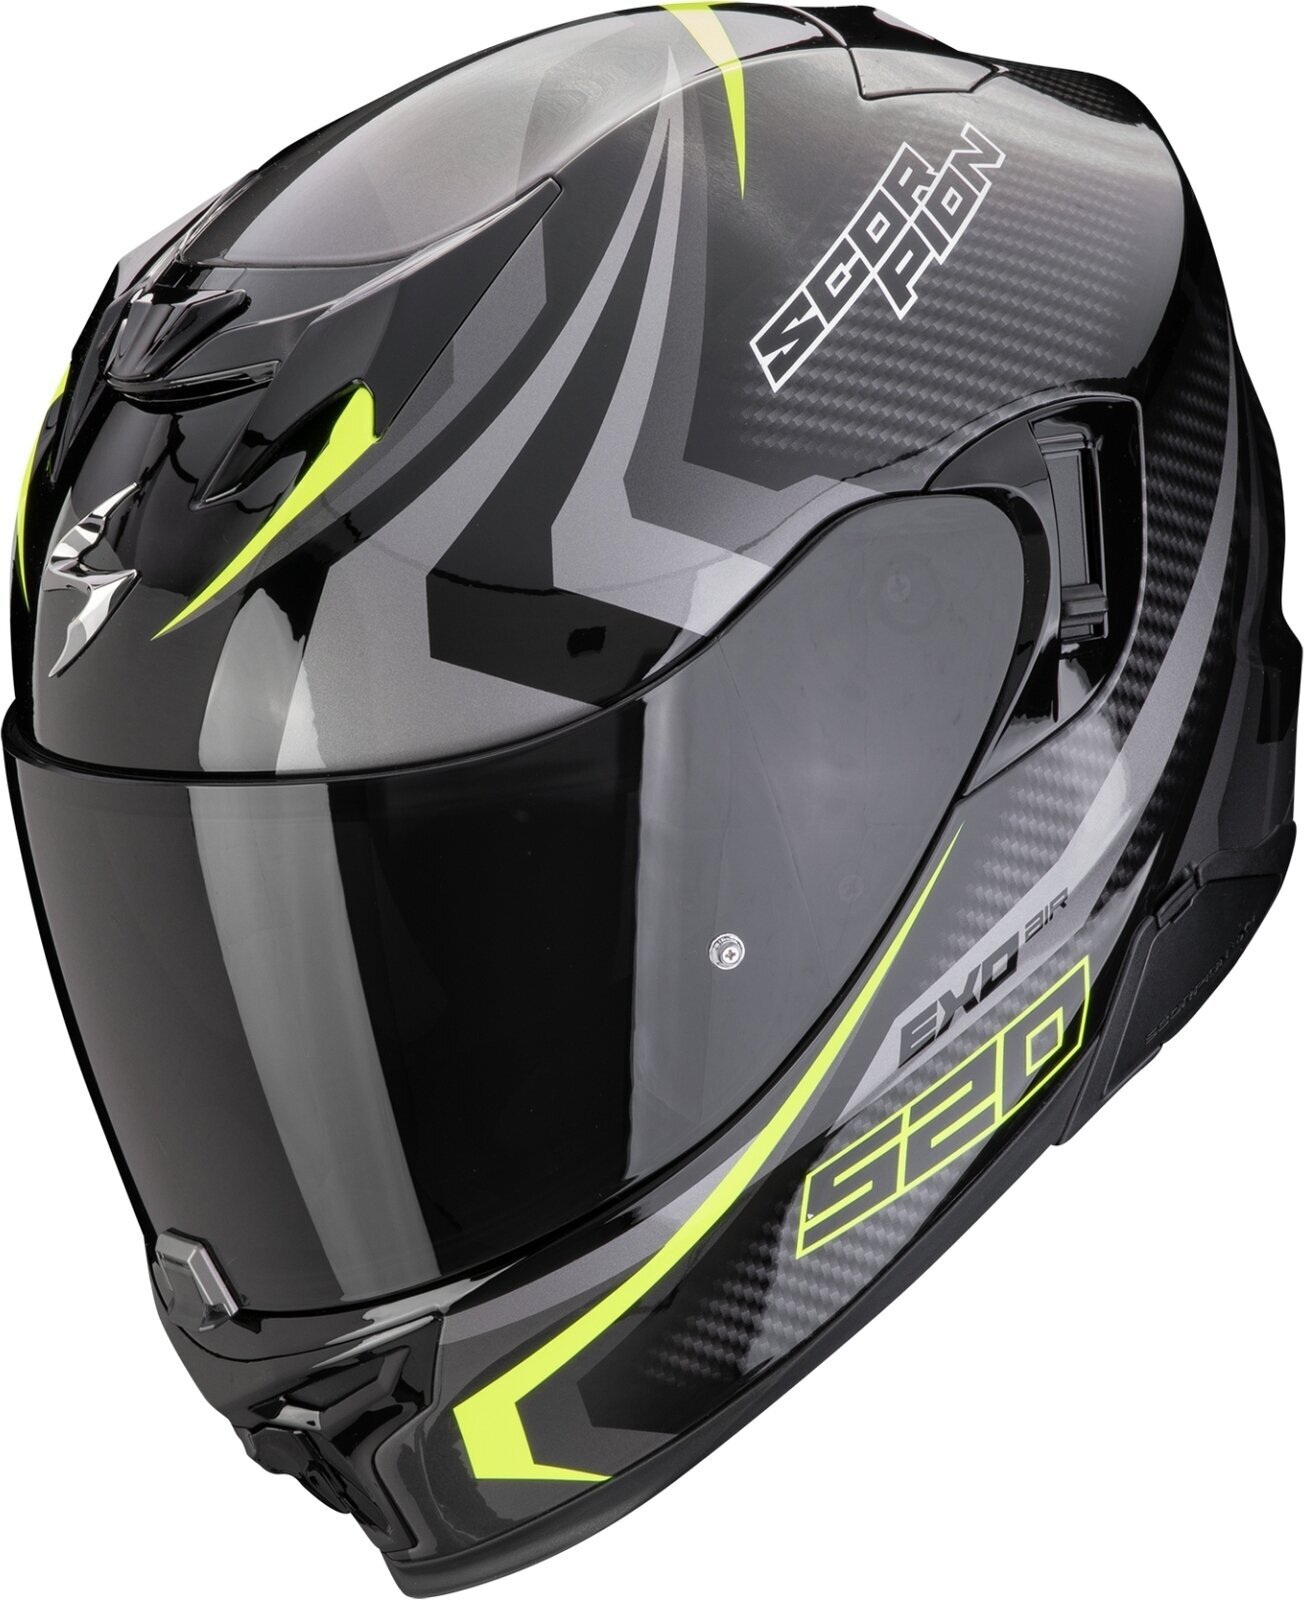 Helm Scorpion EXO 520 EVO AIR TERRA Black/Silver/Neon Yellow S Helm